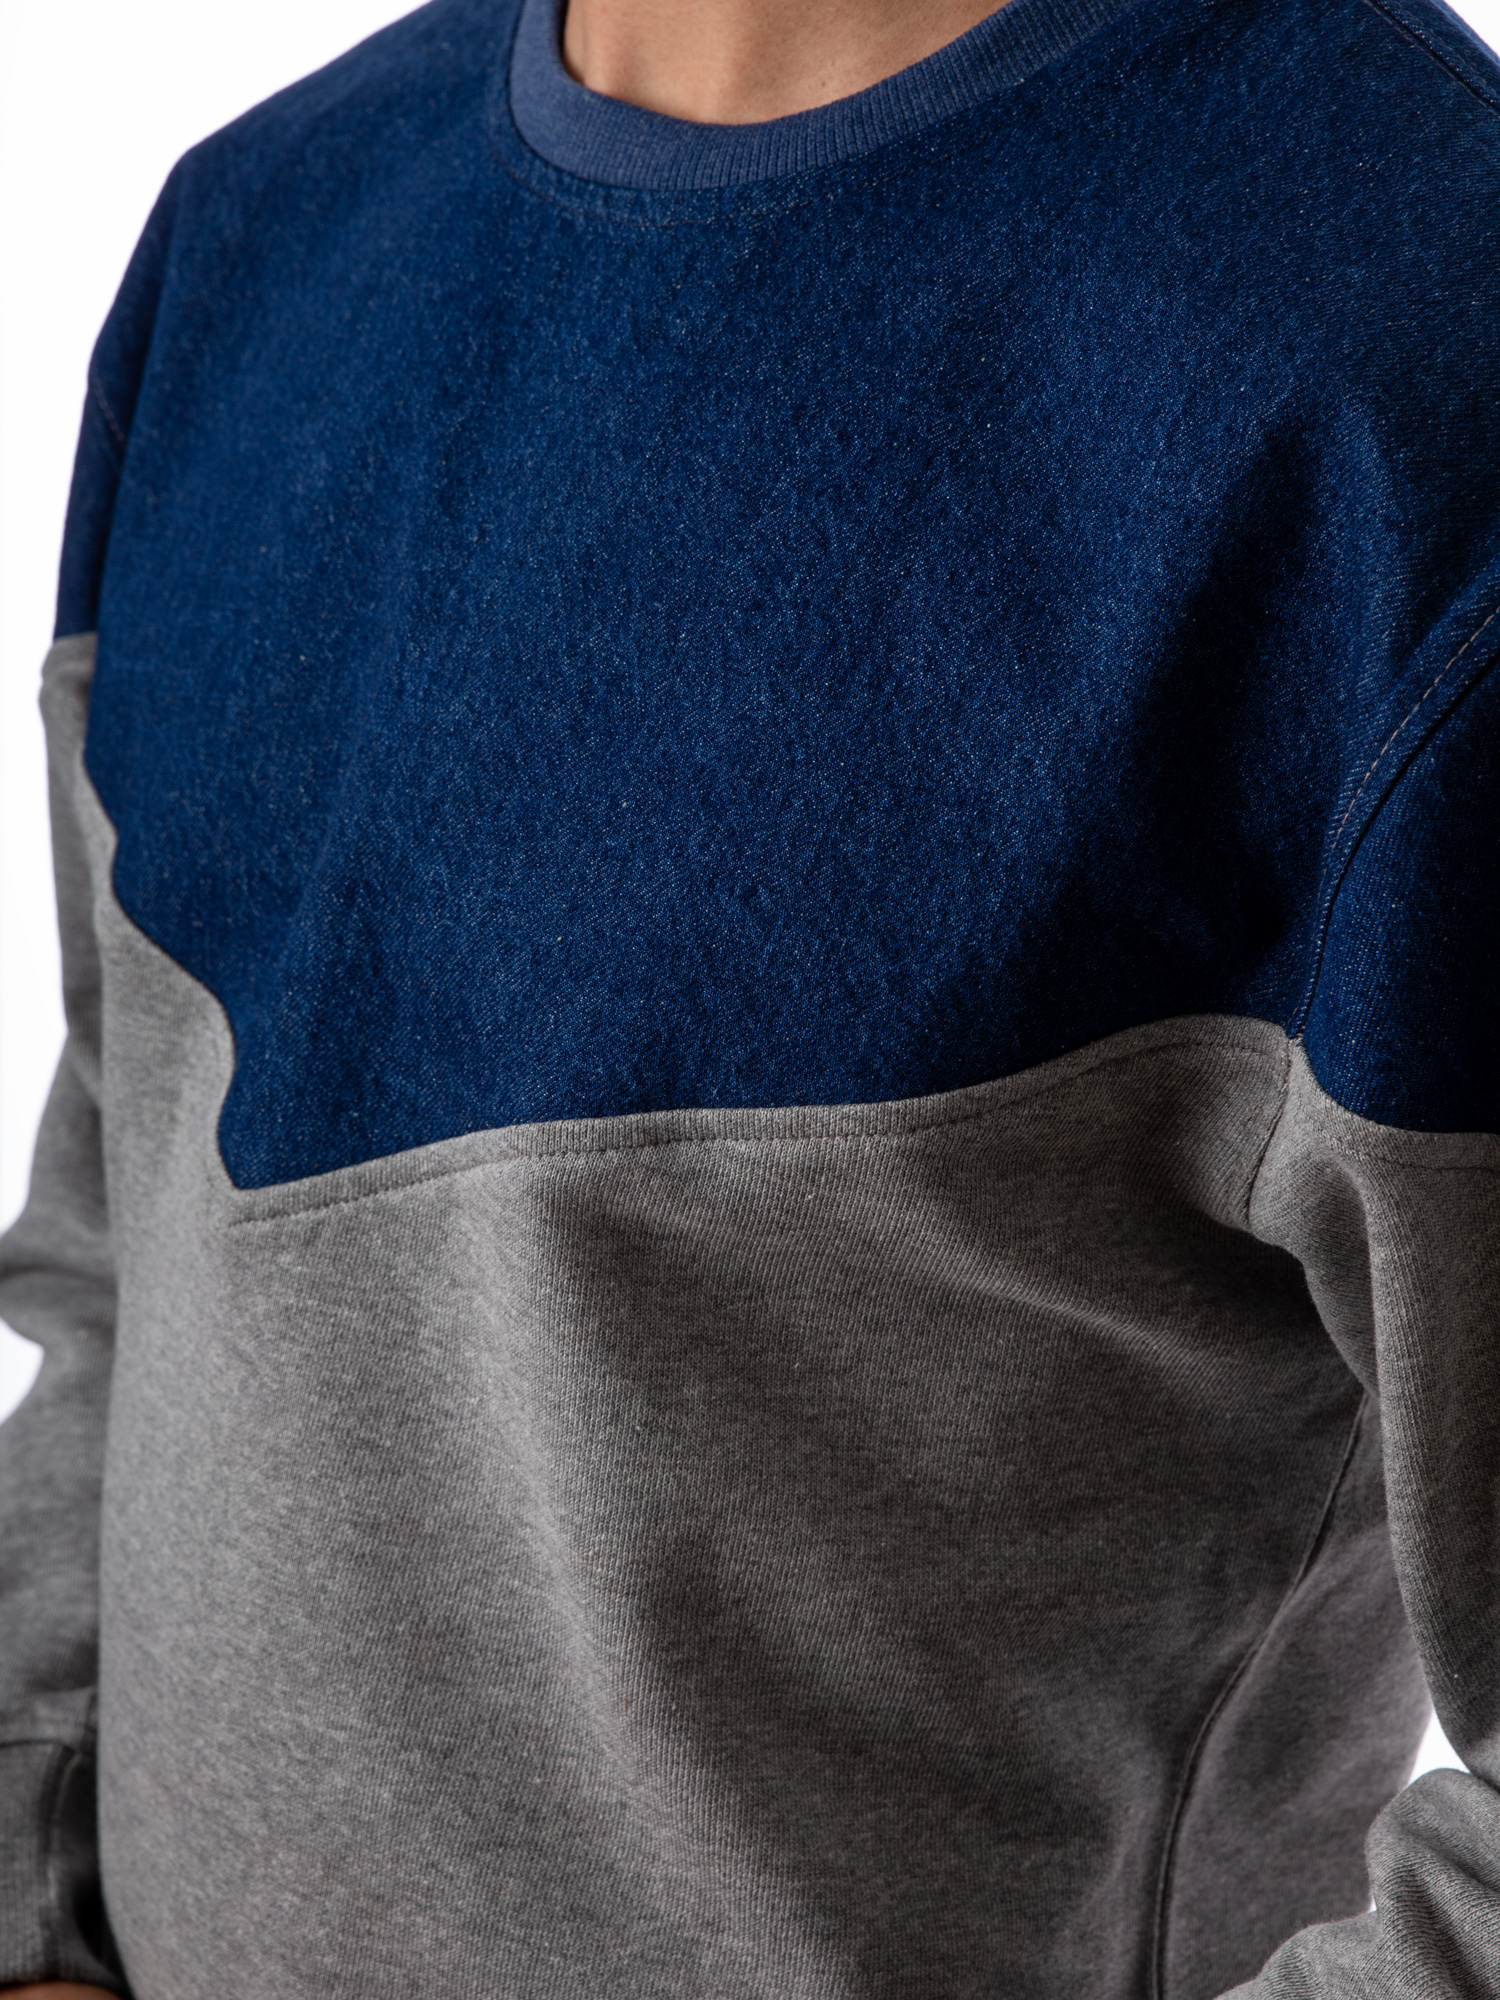 Jordache Vintage Men's Alen Yoke Pullover Sweatshirt, Sizes S-2XL - image 2 of 5